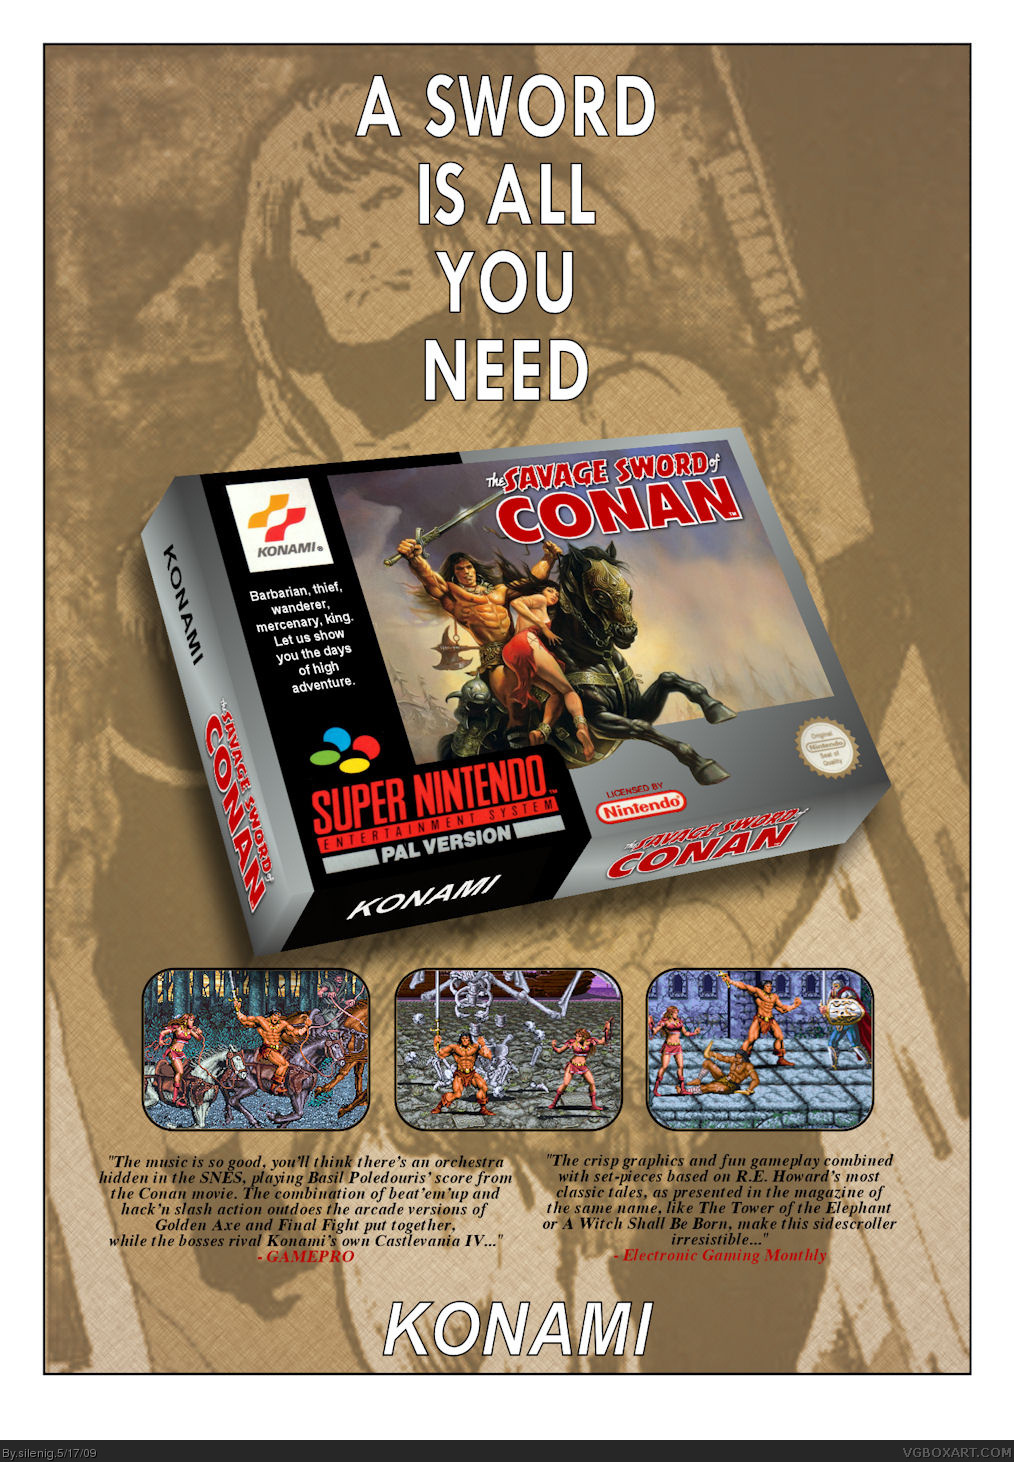 The Savage Sword of Conan box cover